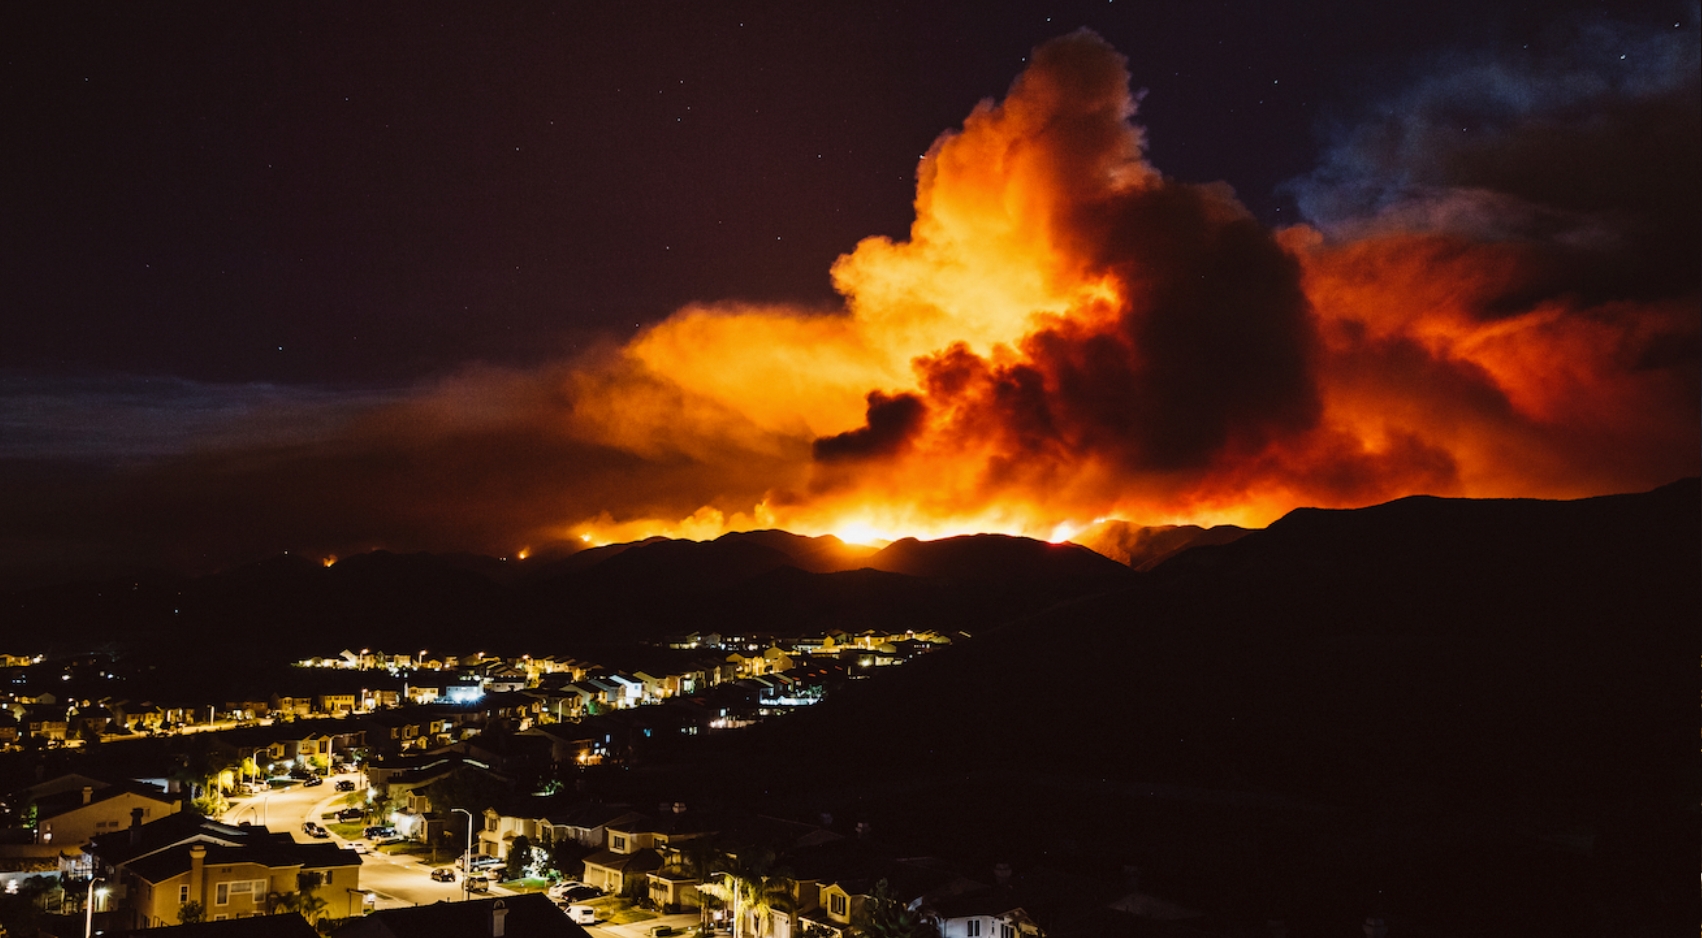 A California wildfire burns near a residential area at night. (Attila Adam/Adobe Stock)